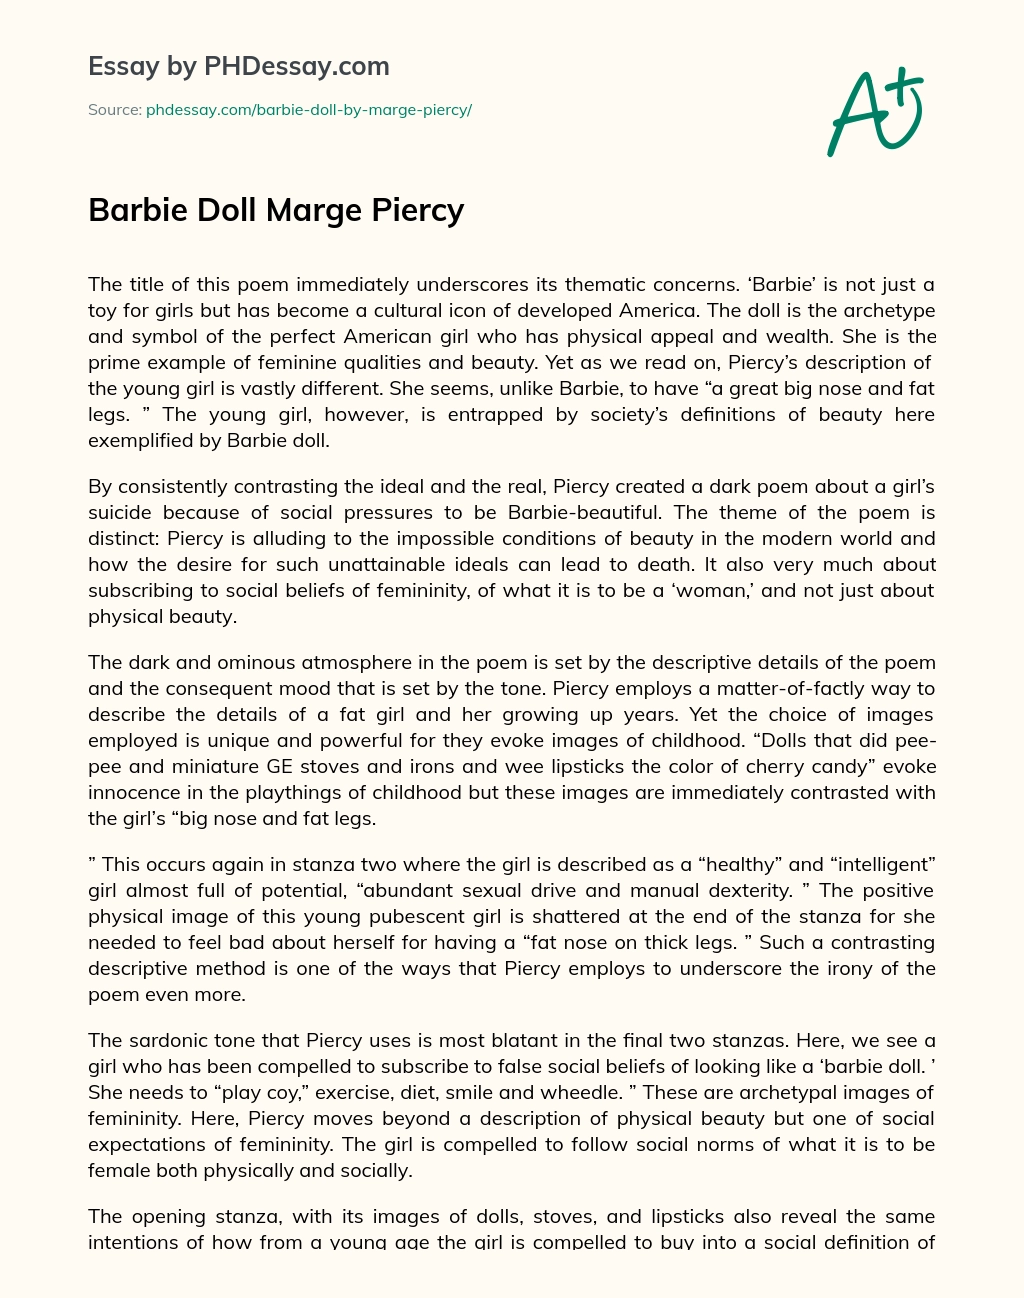 Barbie Doll Marge Piercy essay